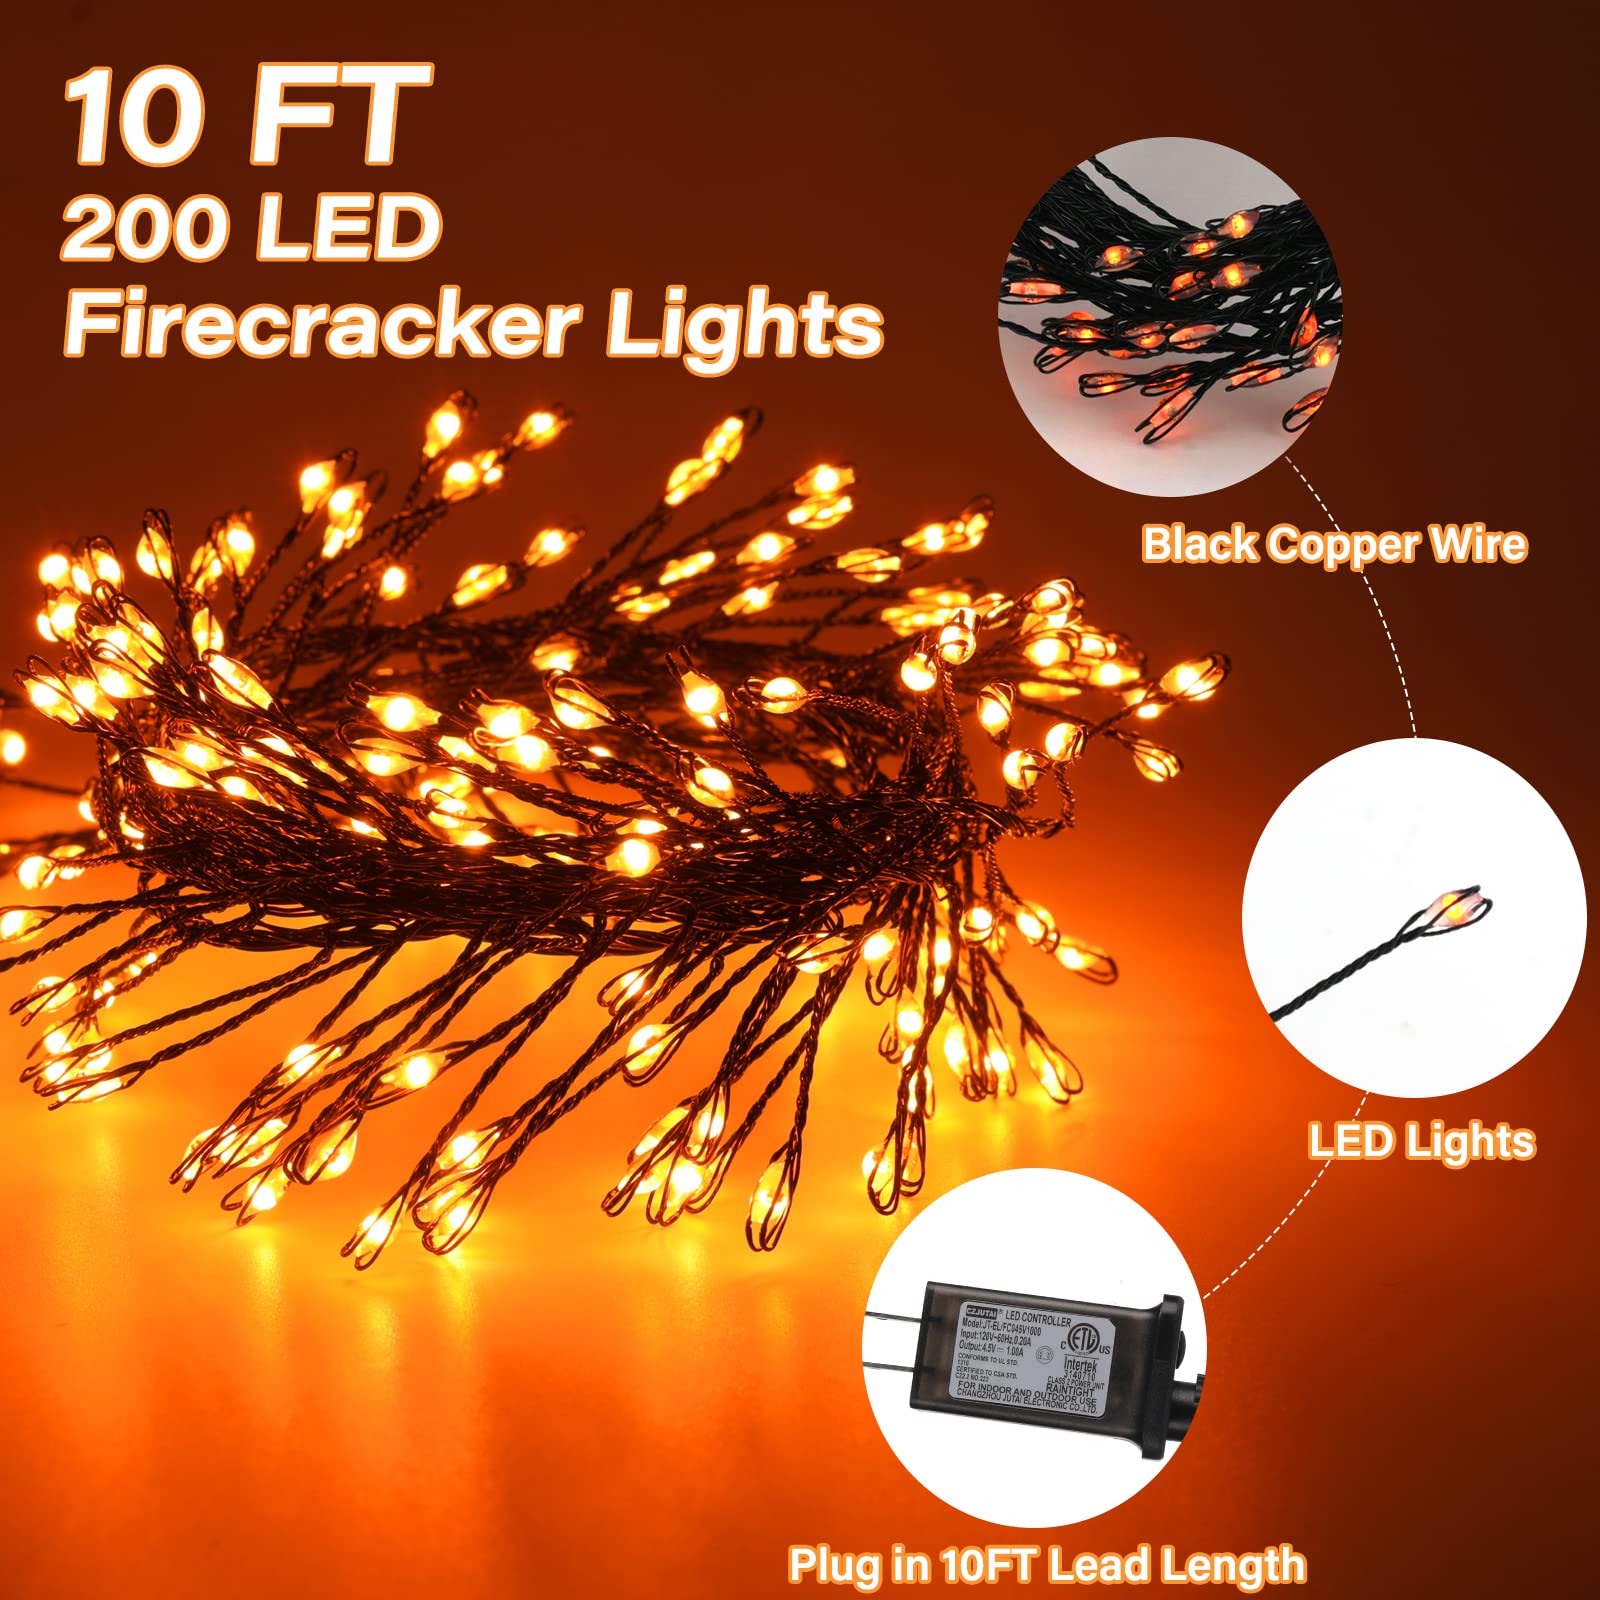 1 x 10 Feet / 200 LED / Orange / Black Wire